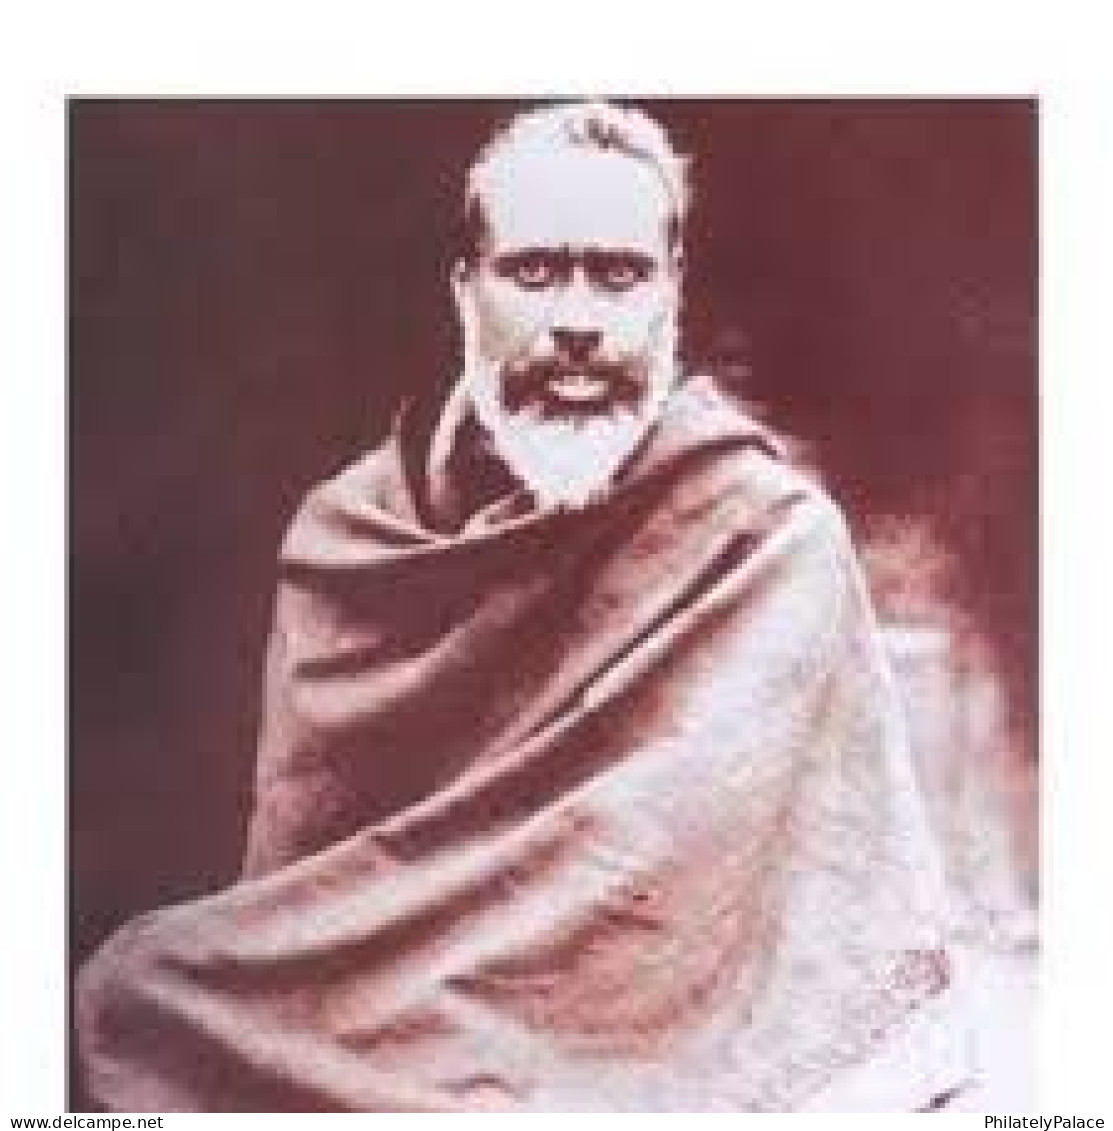 INDIA 2023 150th Birth Anniversary Of Ram Chandra Maharaj,Meditation,Yoga. Hindu,Hinduism, Used (**) Inde,Indien - Oblitérés